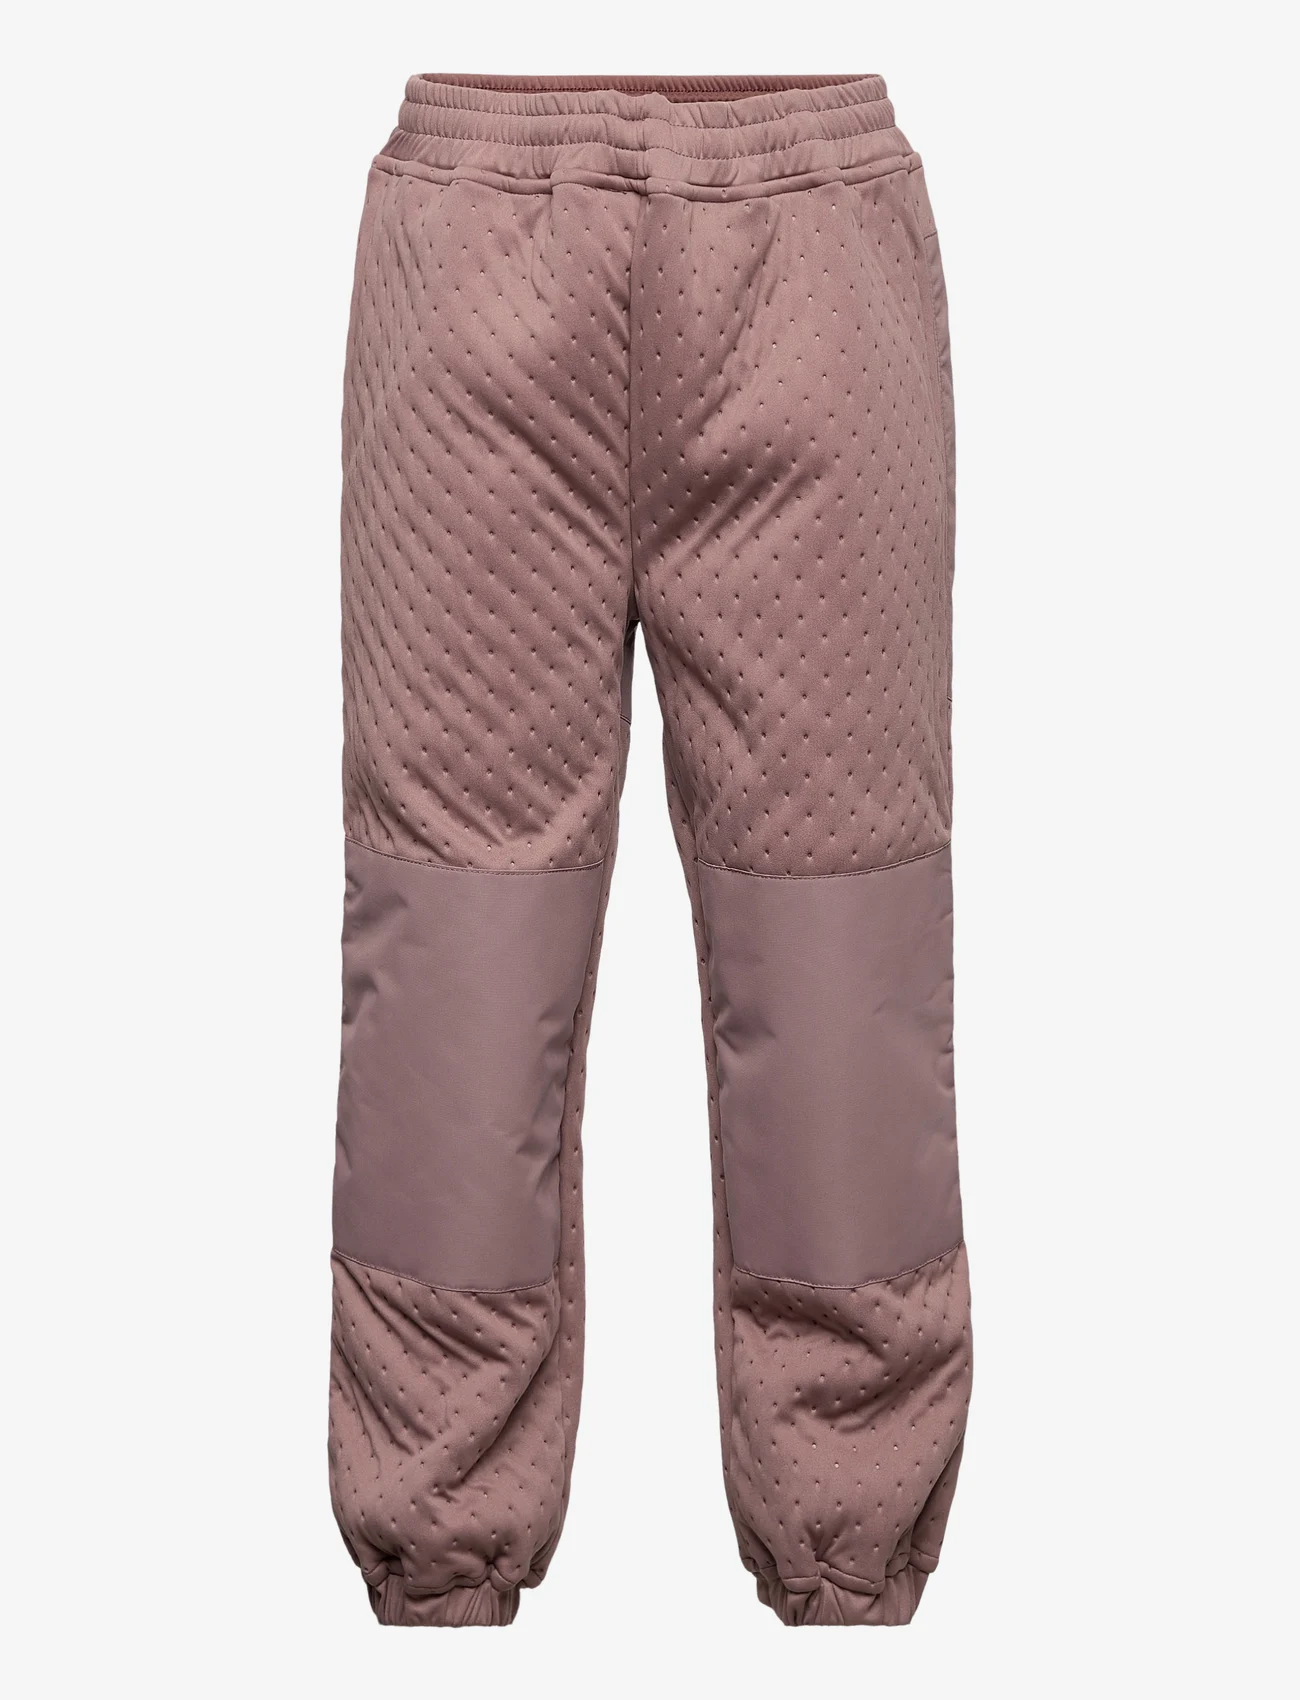 mikk-line - Soft Thermo Recycled Uni Pants - kevyttoppahousut - twilight mauve - 0